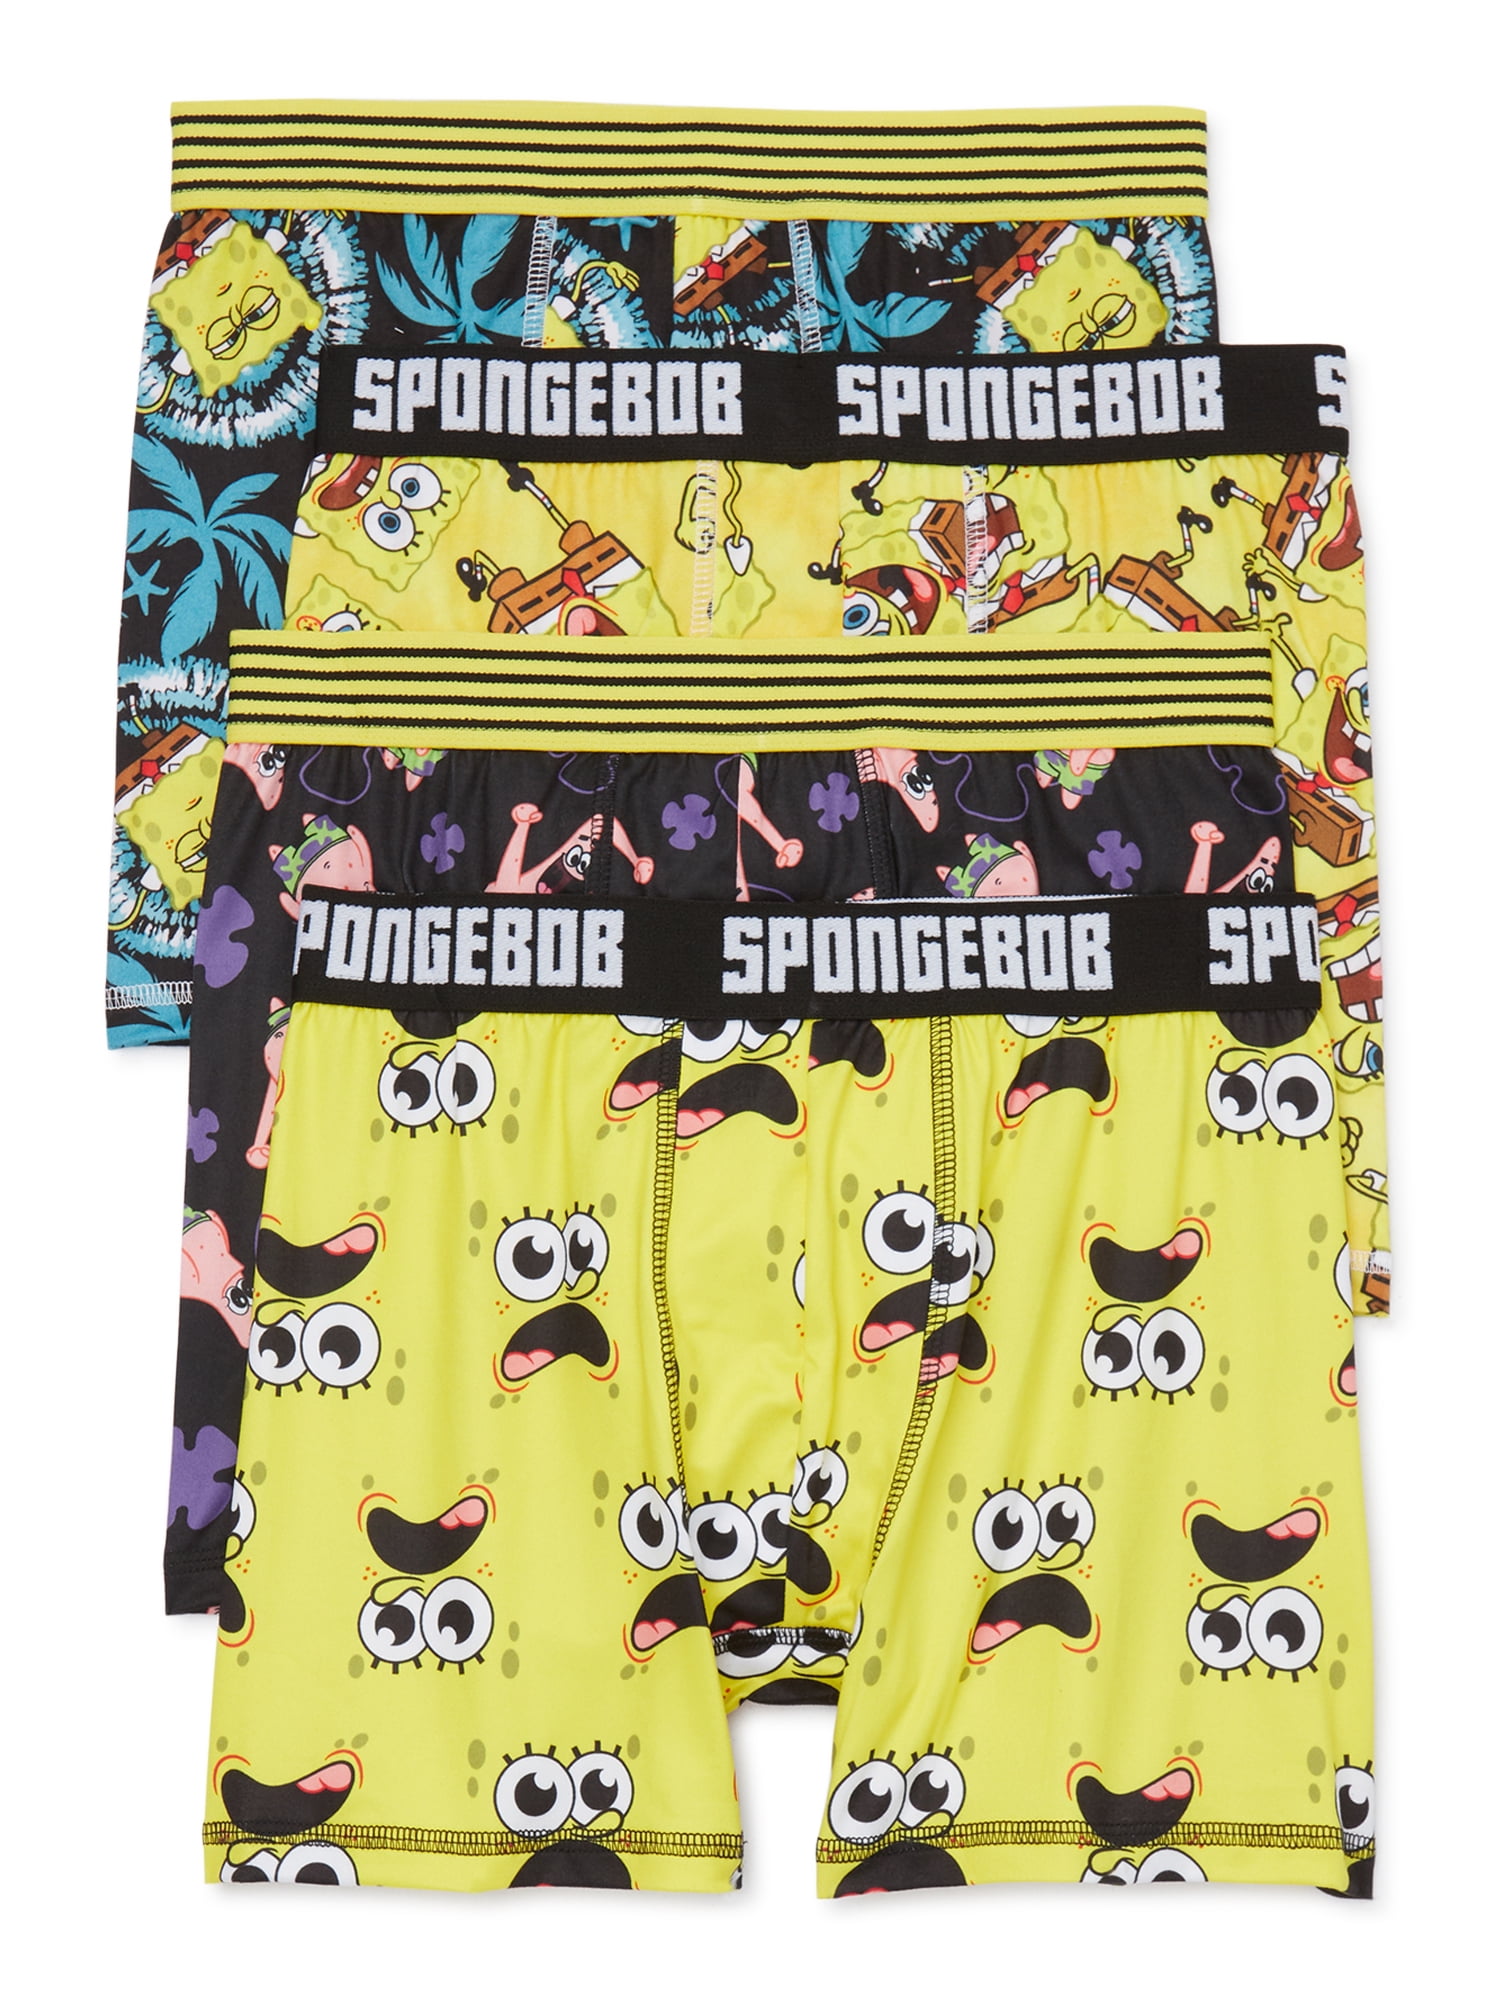 Nickelodeon Boys SpongeBob SquarePants Boxer Briefs Underwear, 4-Pack,  Sizes 4-10